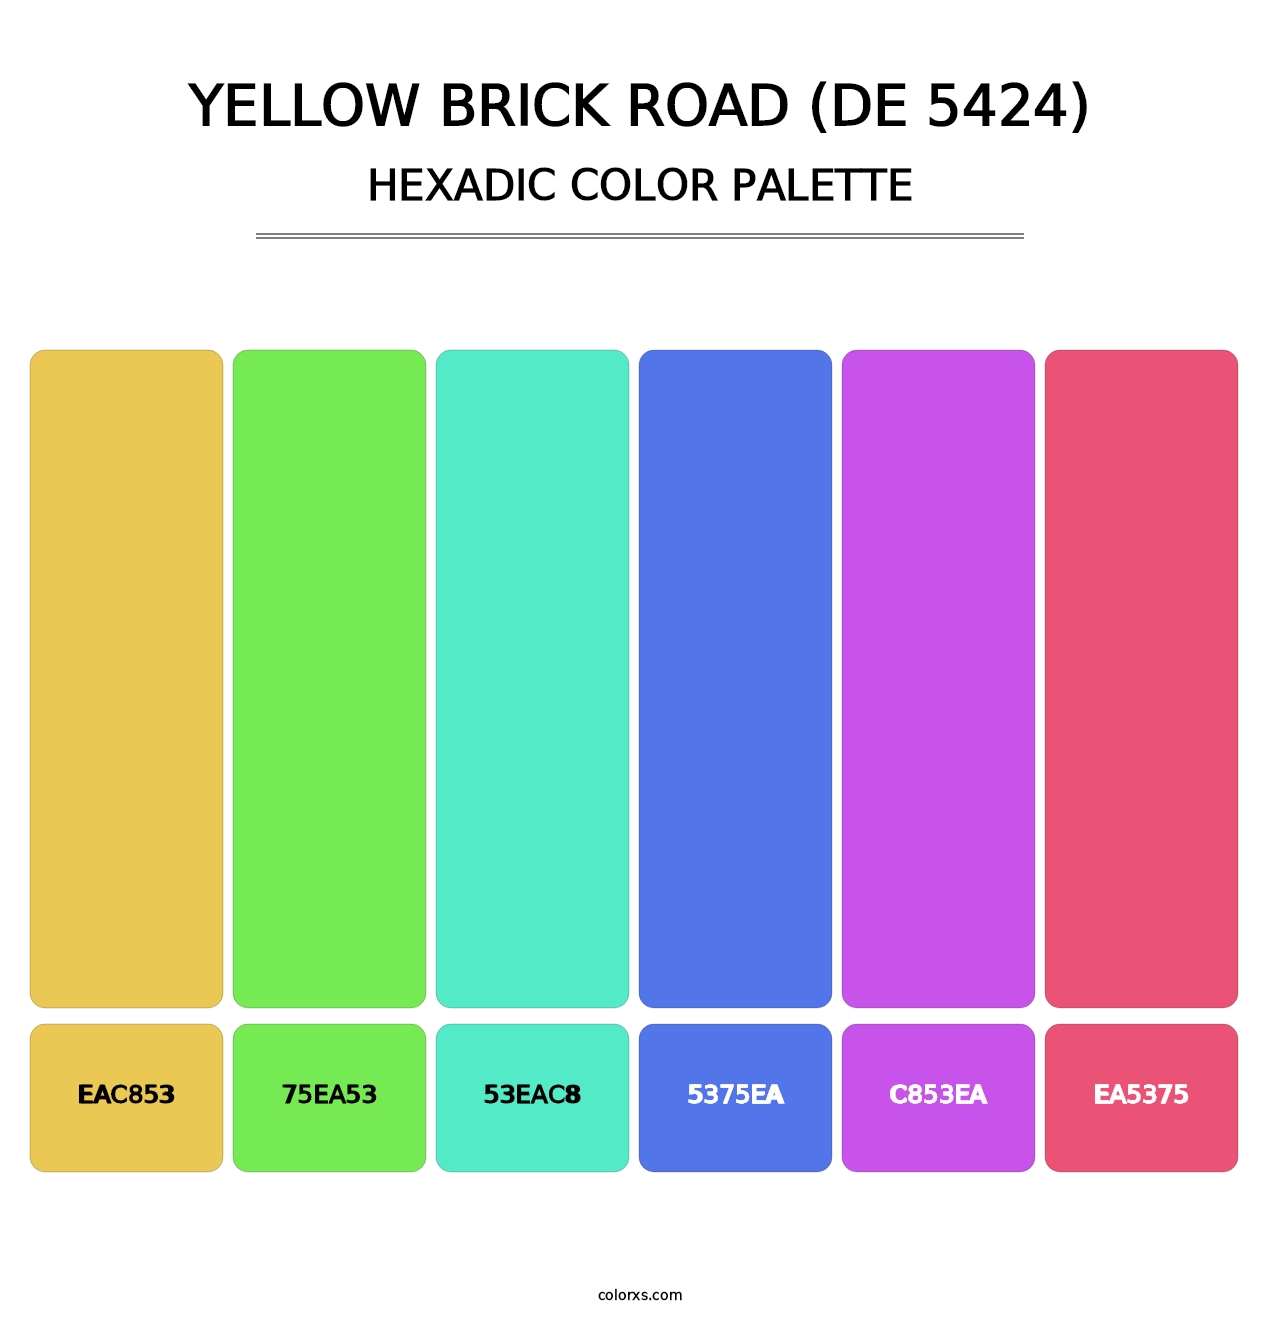 Yellow Brick Road (DE 5424) - Hexadic Color Palette